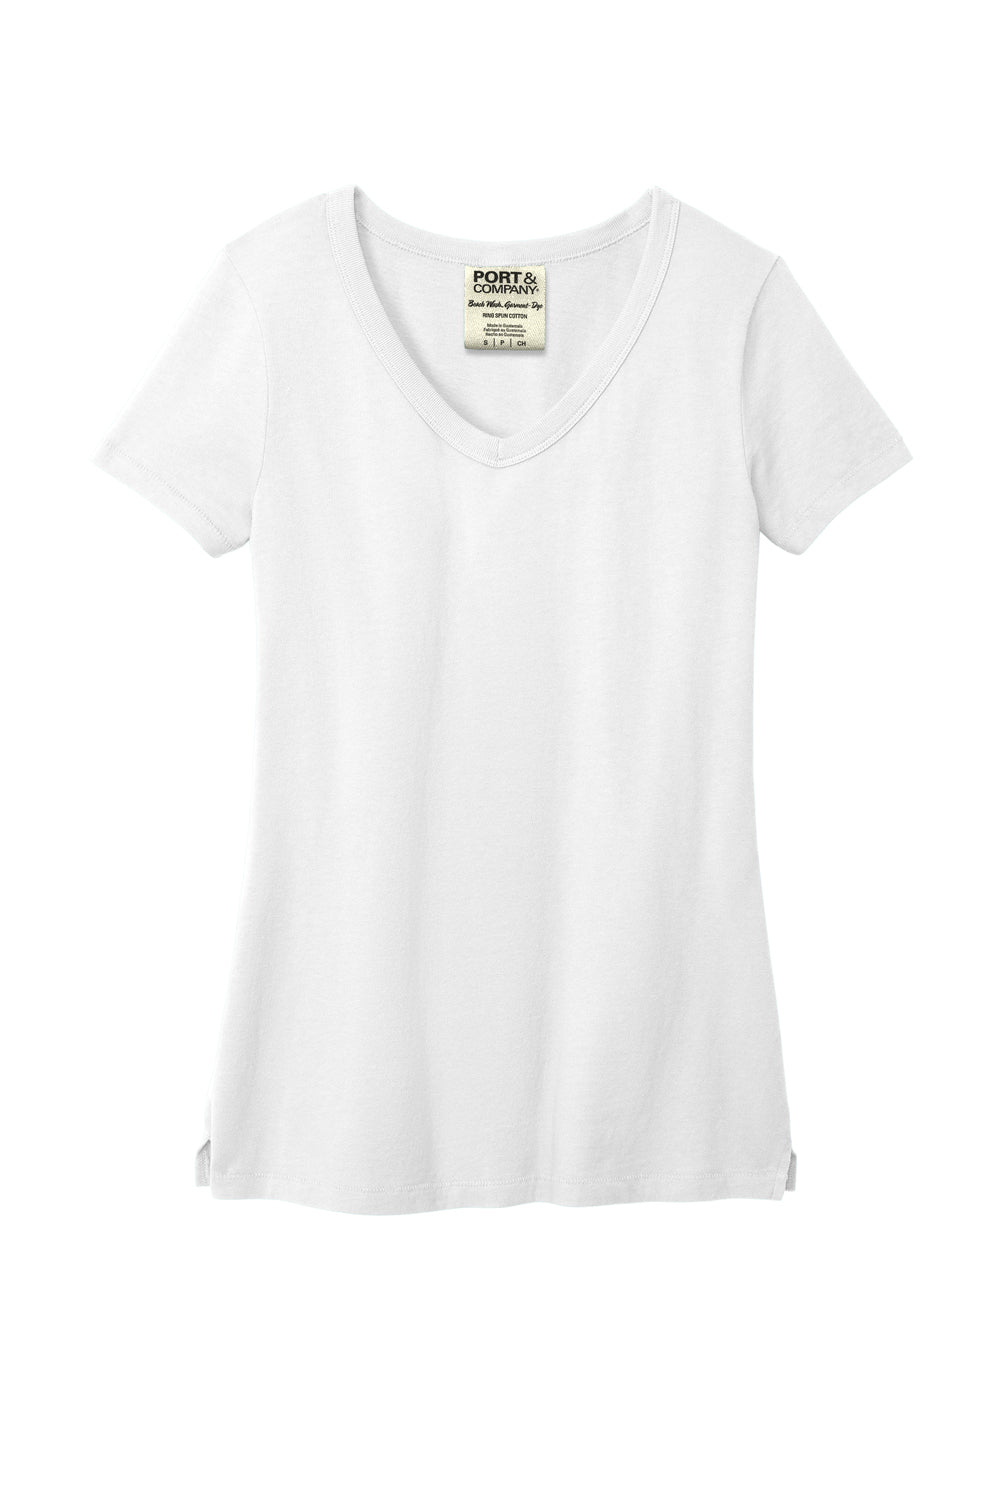 Port & Company LPC099V Womens Beach Wash Garment Dyed Short Sleeve V-Neck T-Shirt White Flat Front